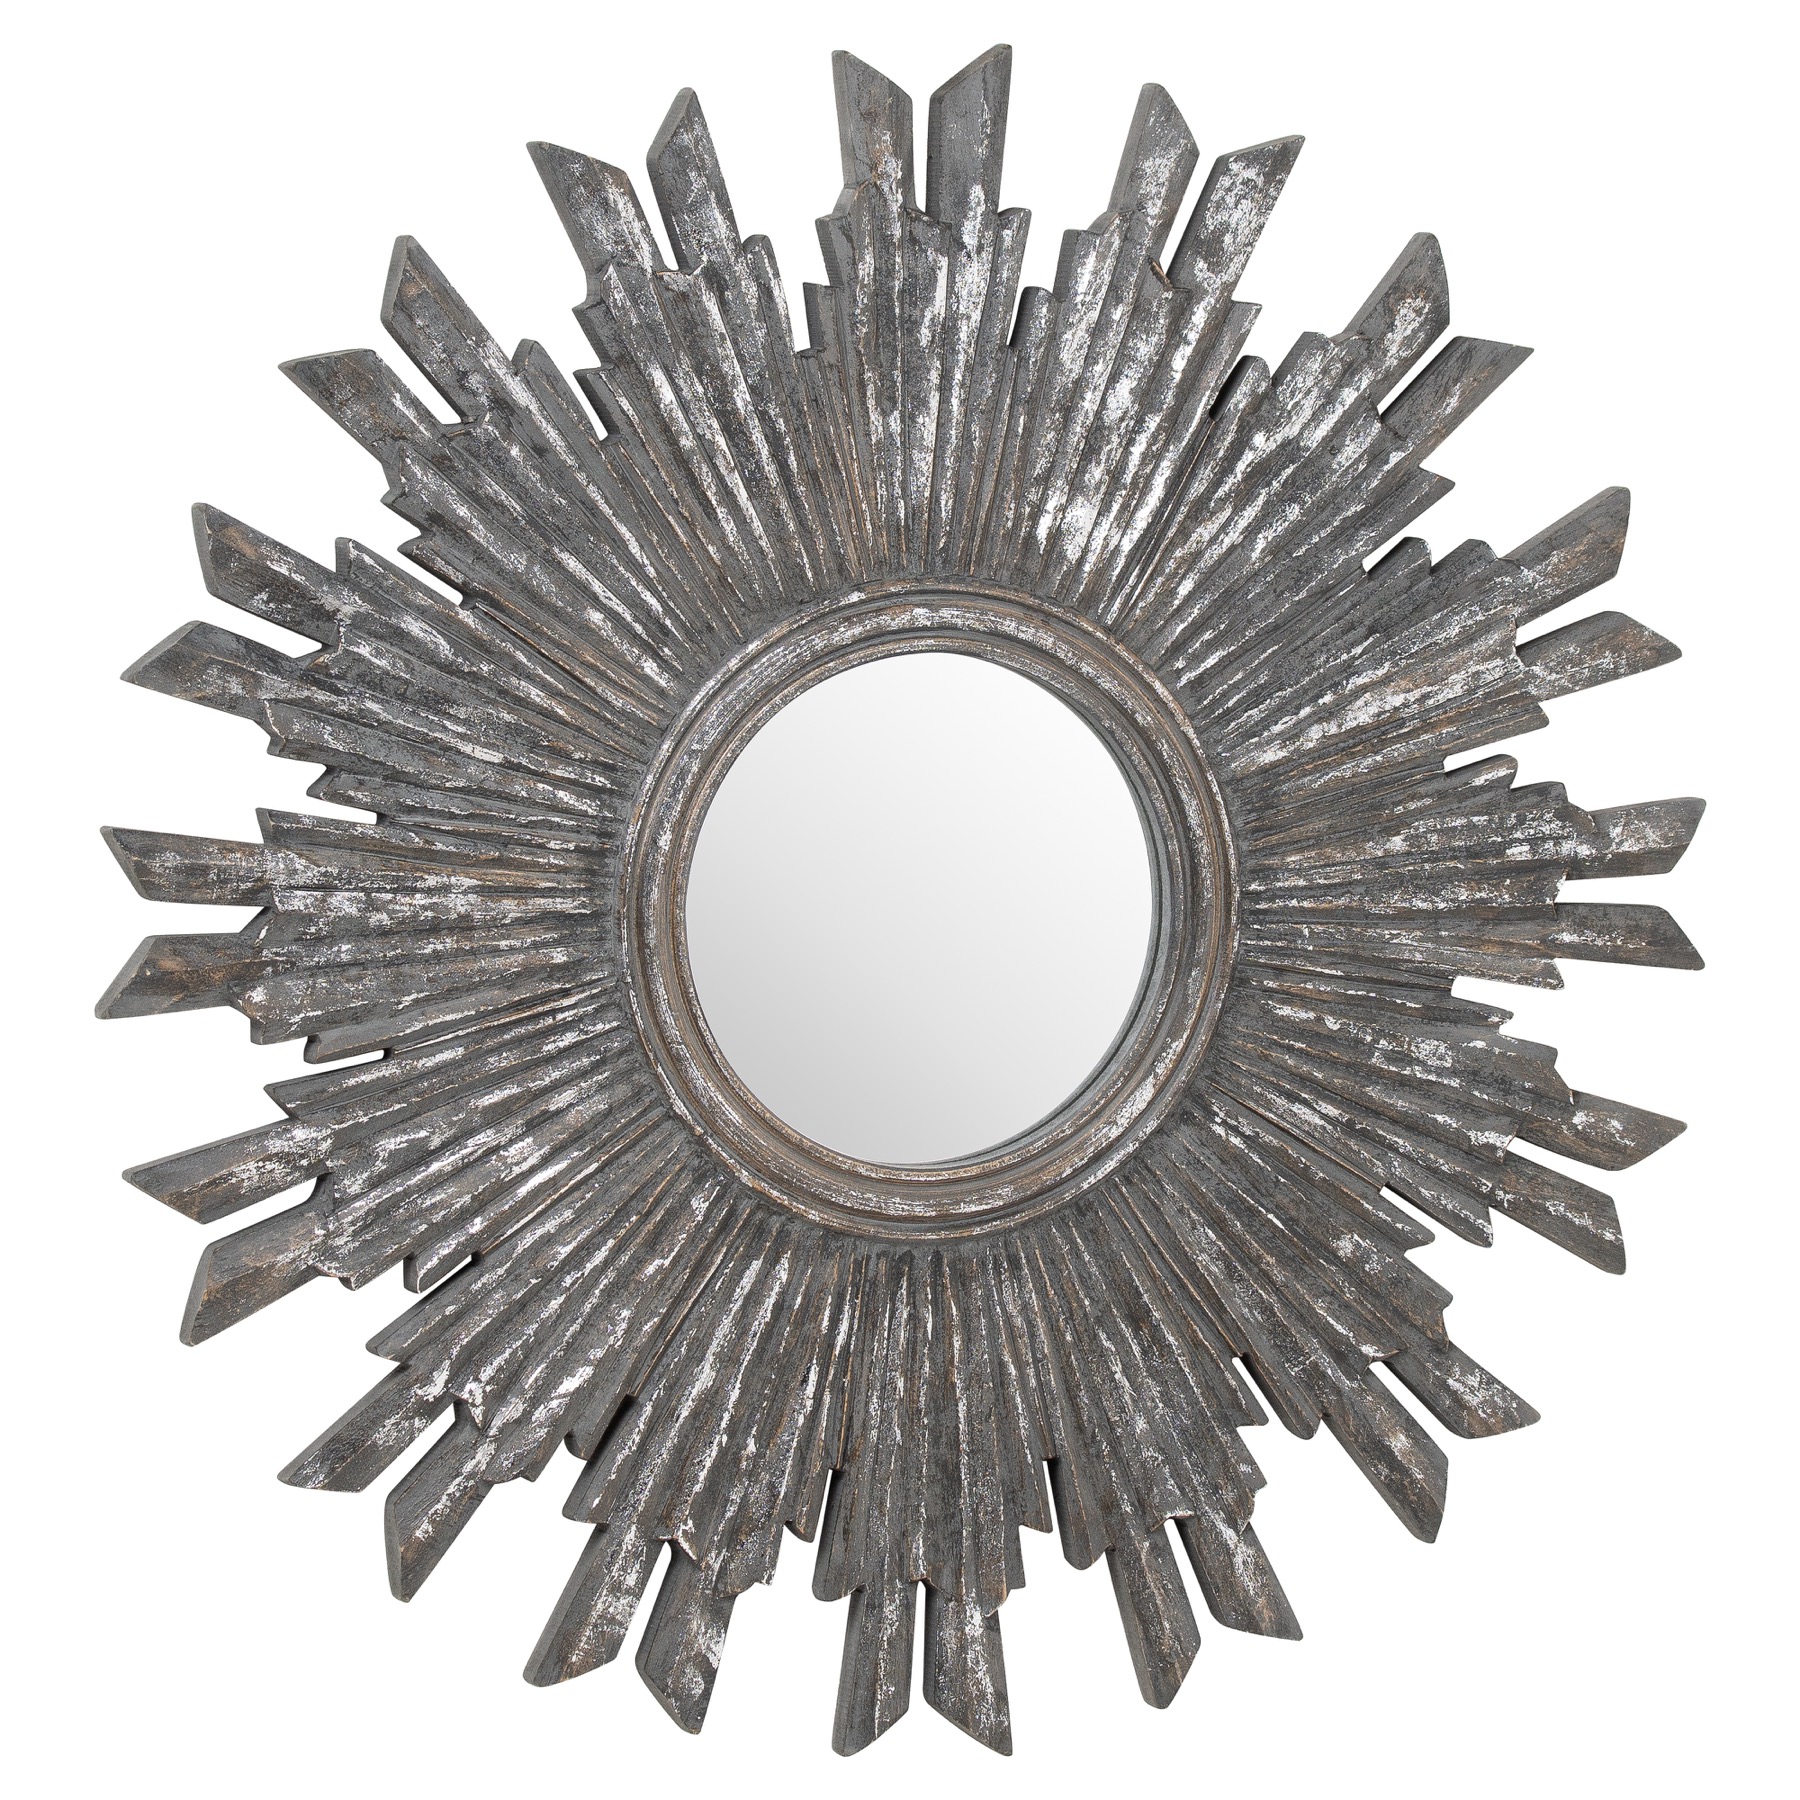 Circular Antique Metallic Burst Mirror - Image 1